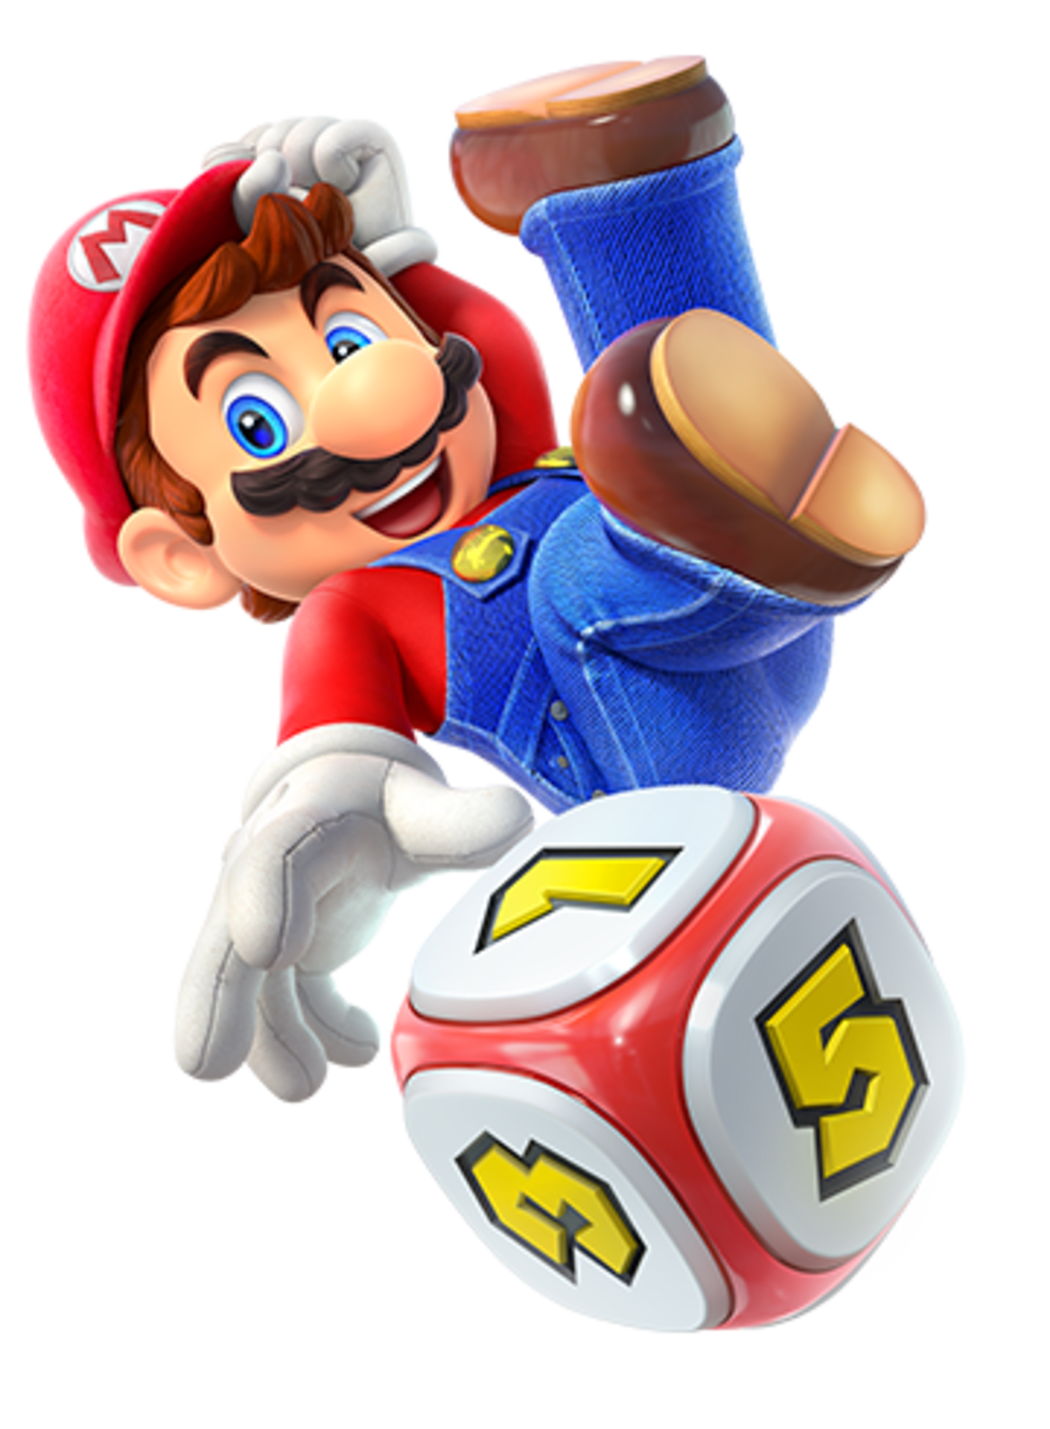 Misfortune Status North Super Mario Party™ for Nintendo Switch - Nintendo Official Site